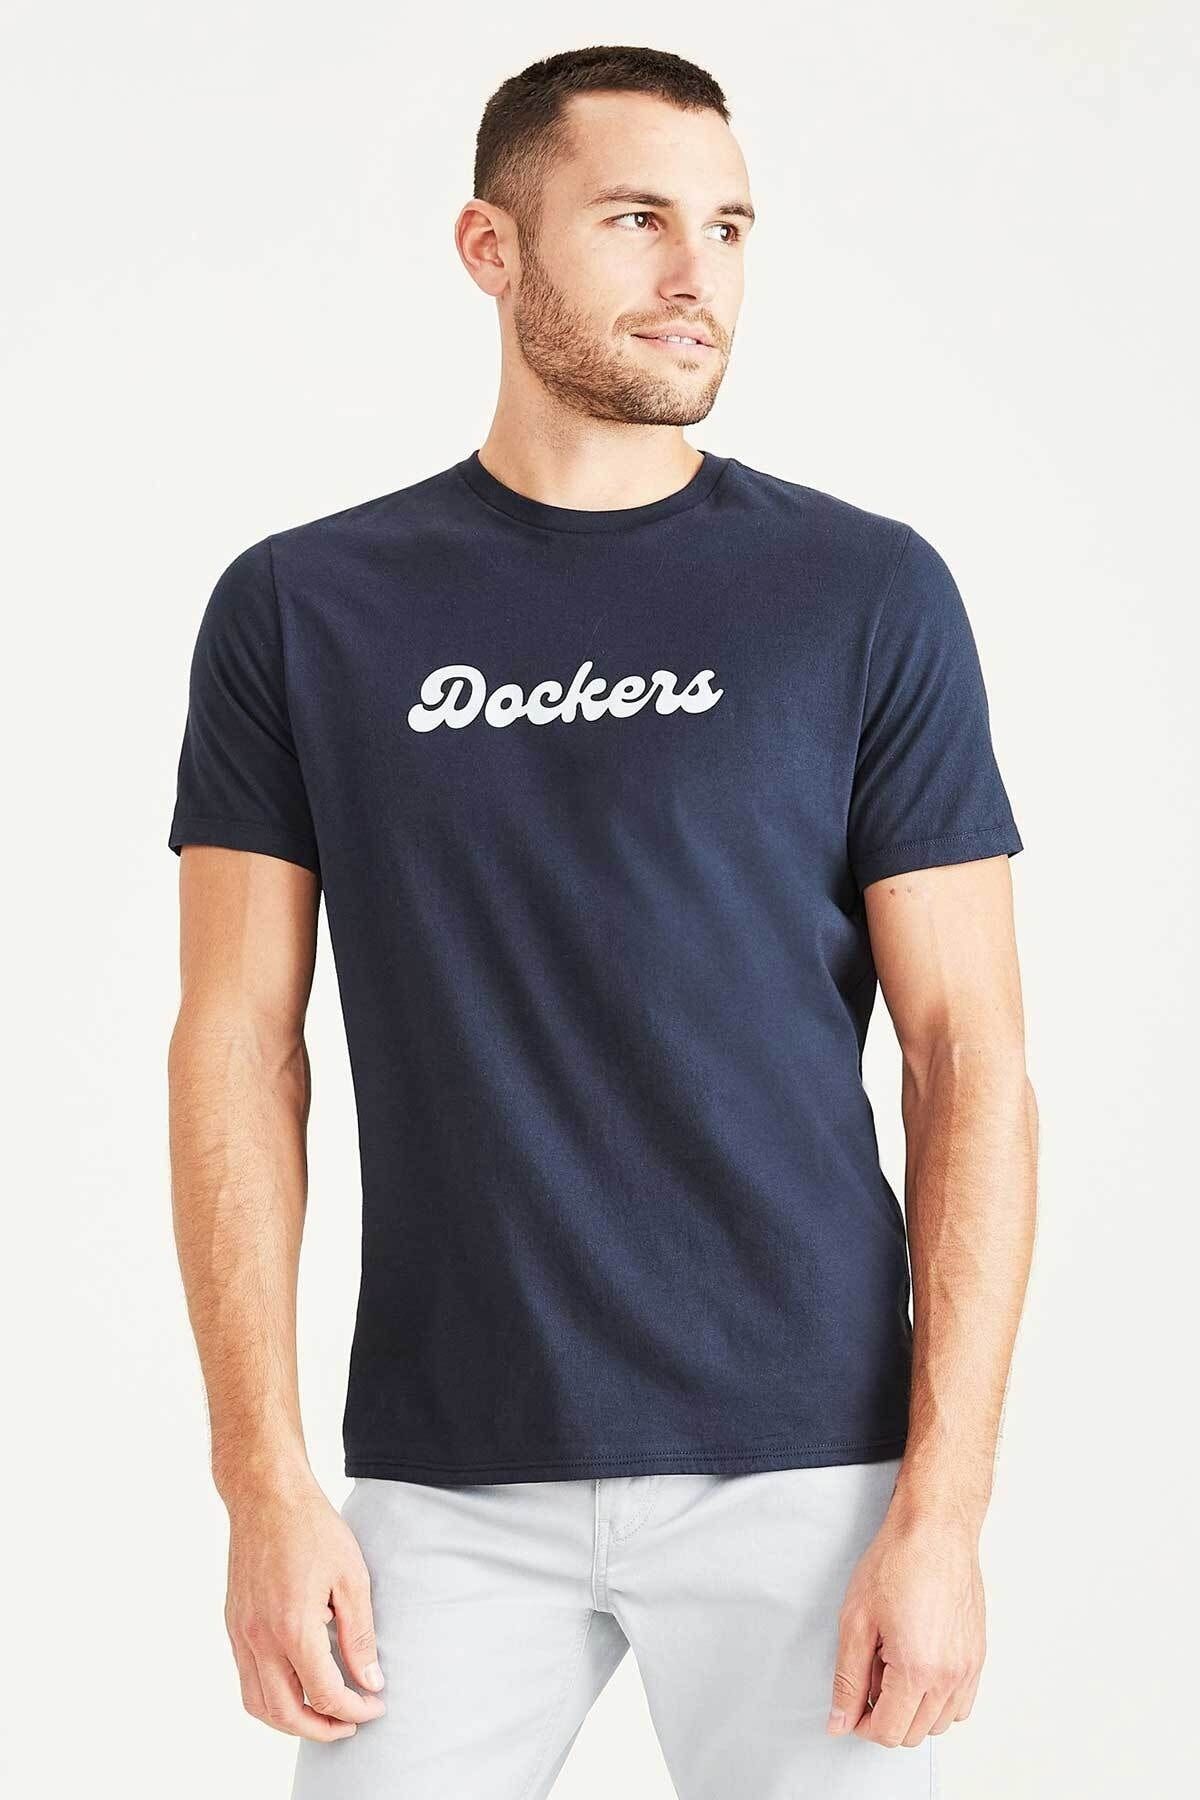 Dockers Logo Tee